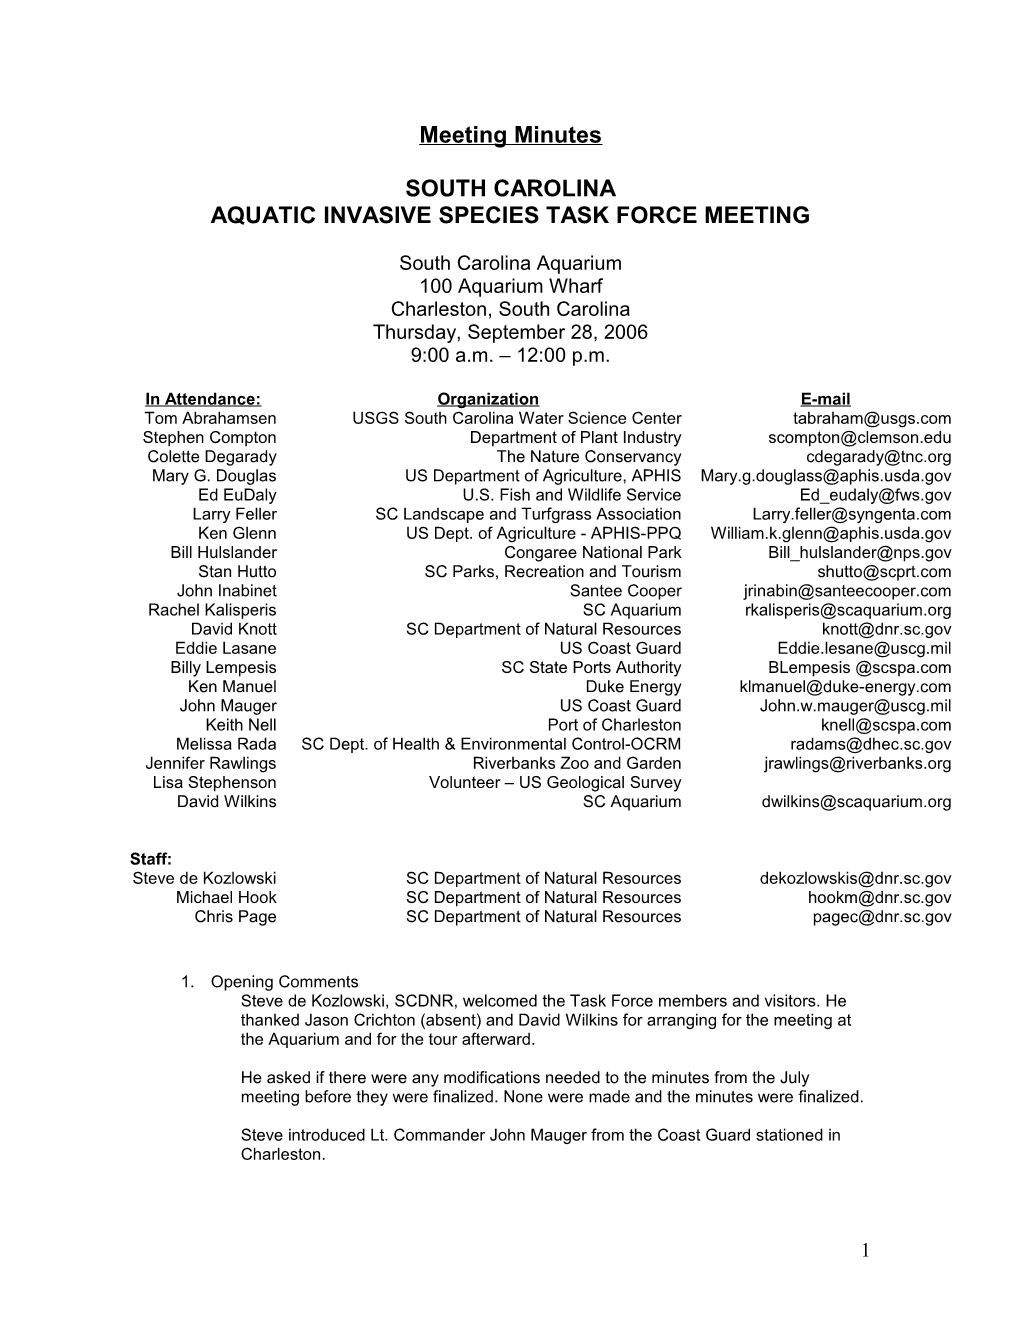 Aquatic Invasive Species Task Force